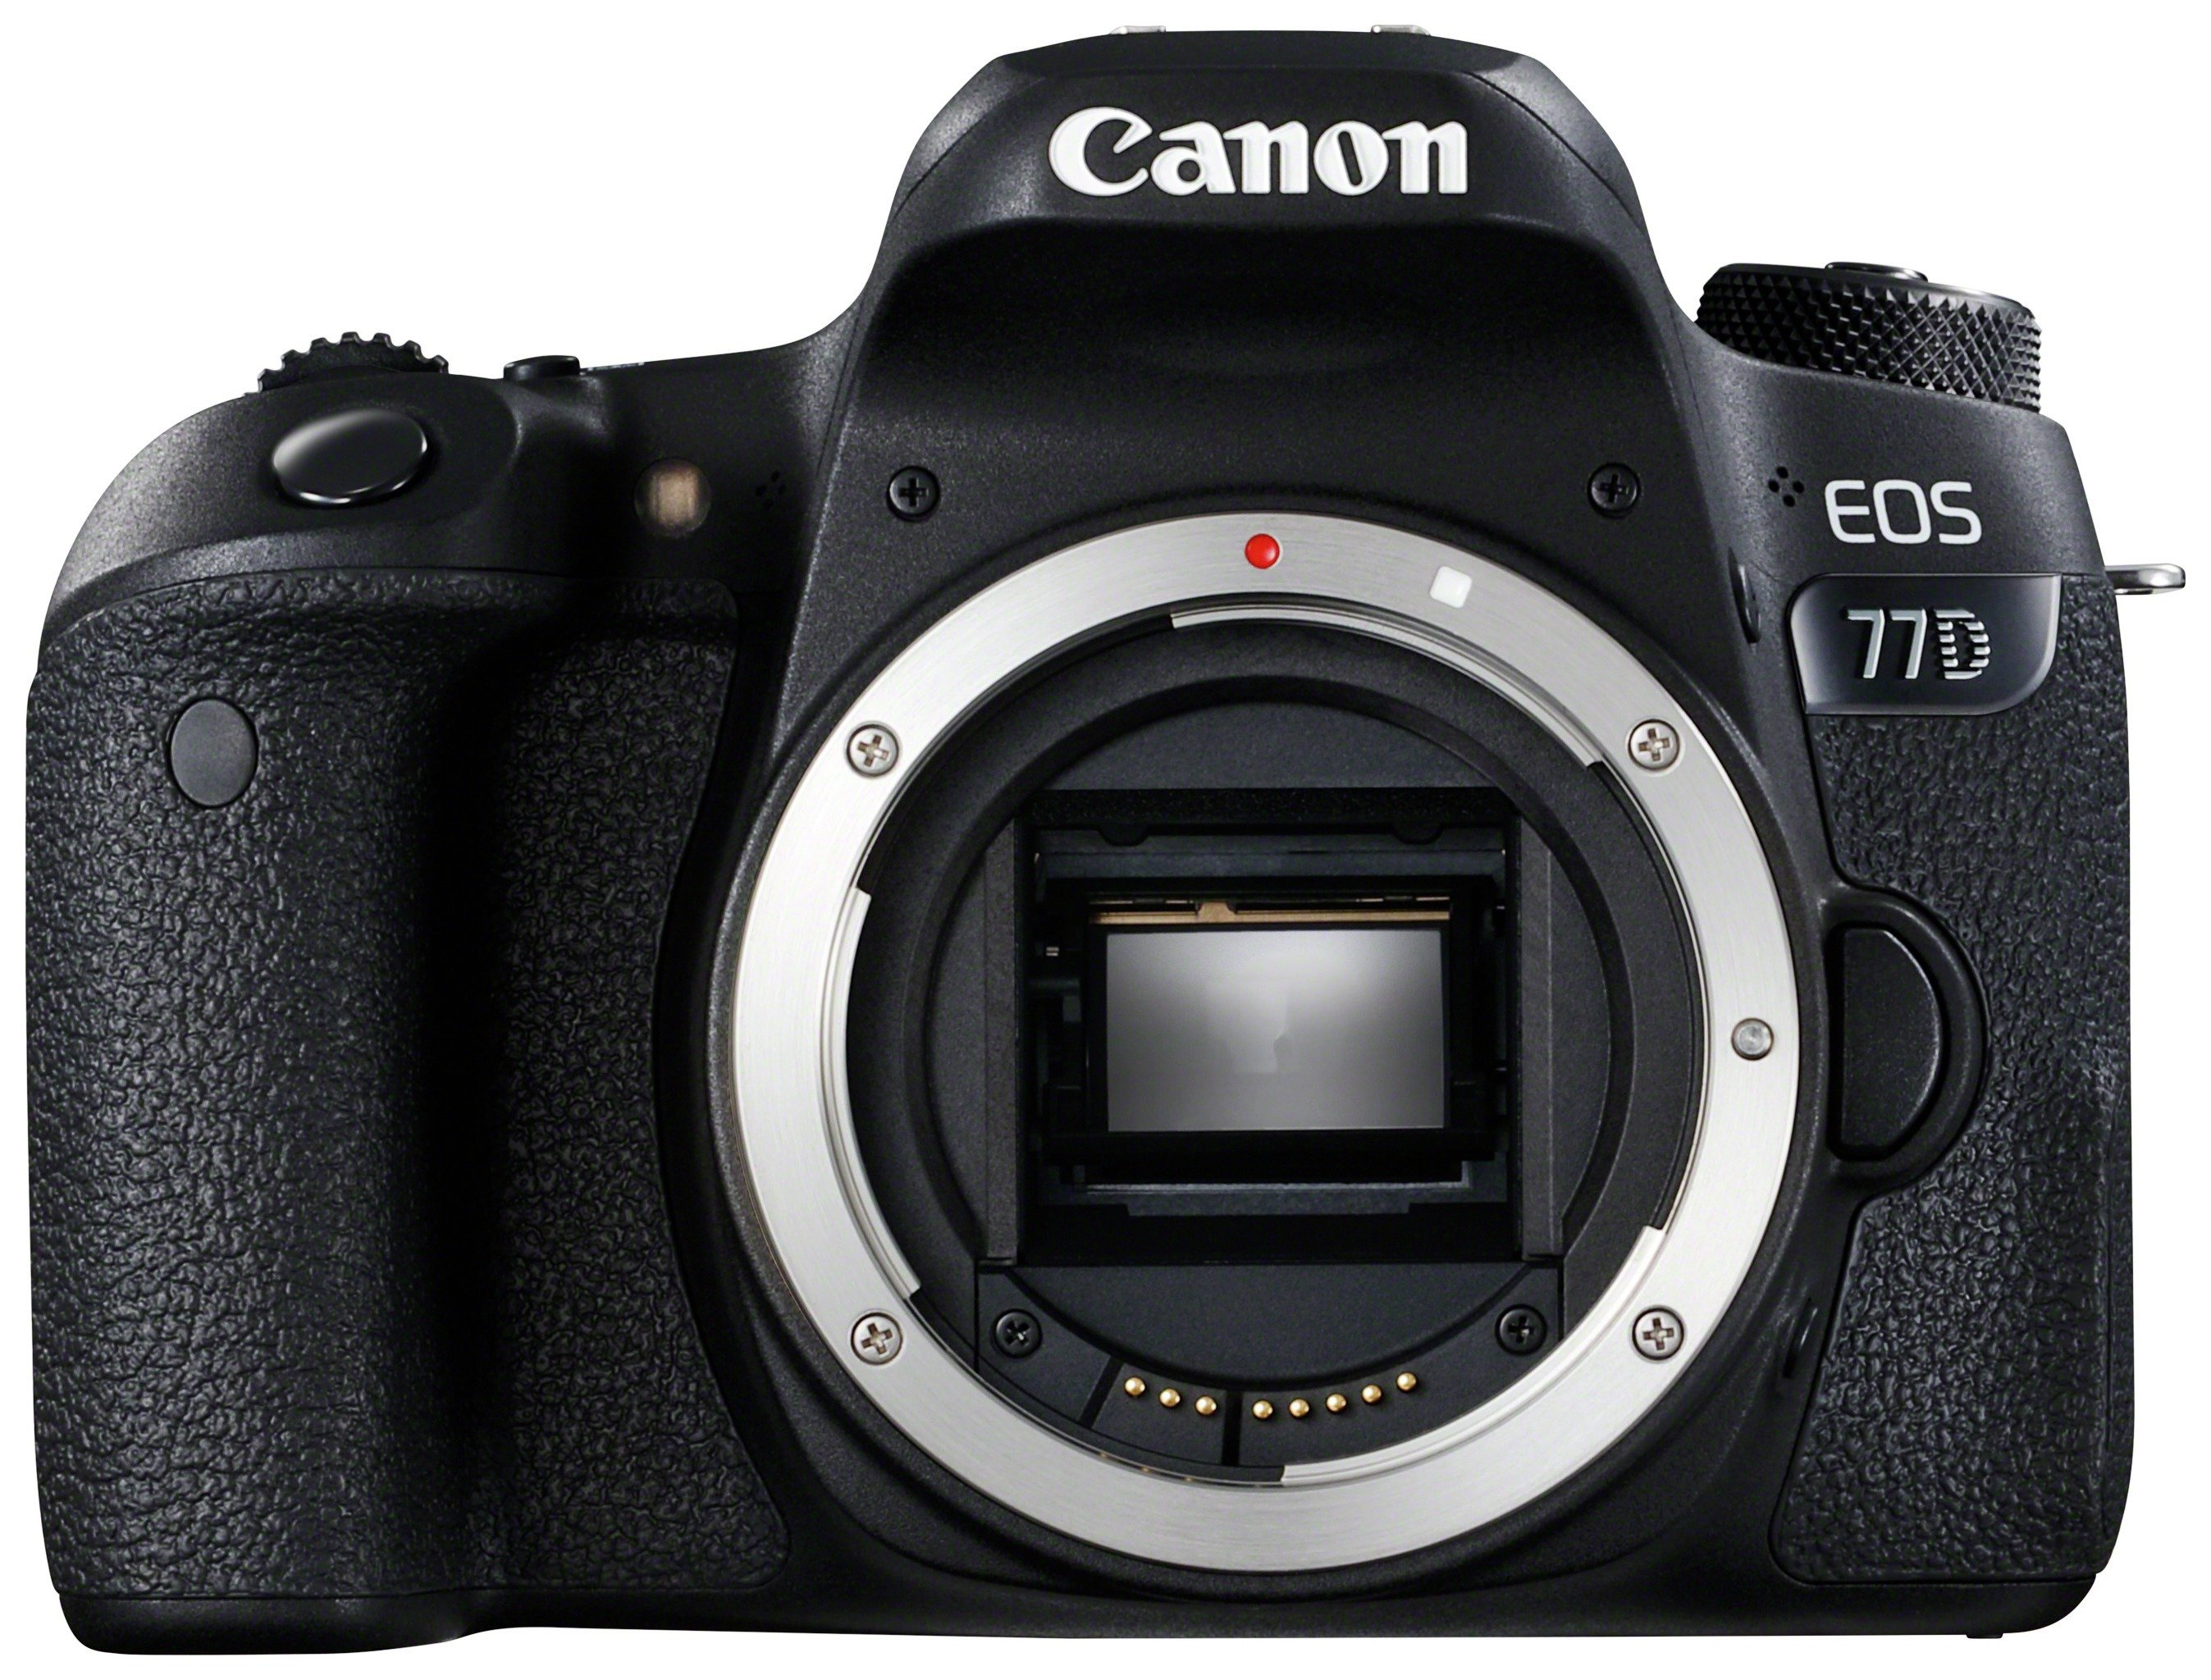 Canon EOS 77D DSLR Camera Body Review